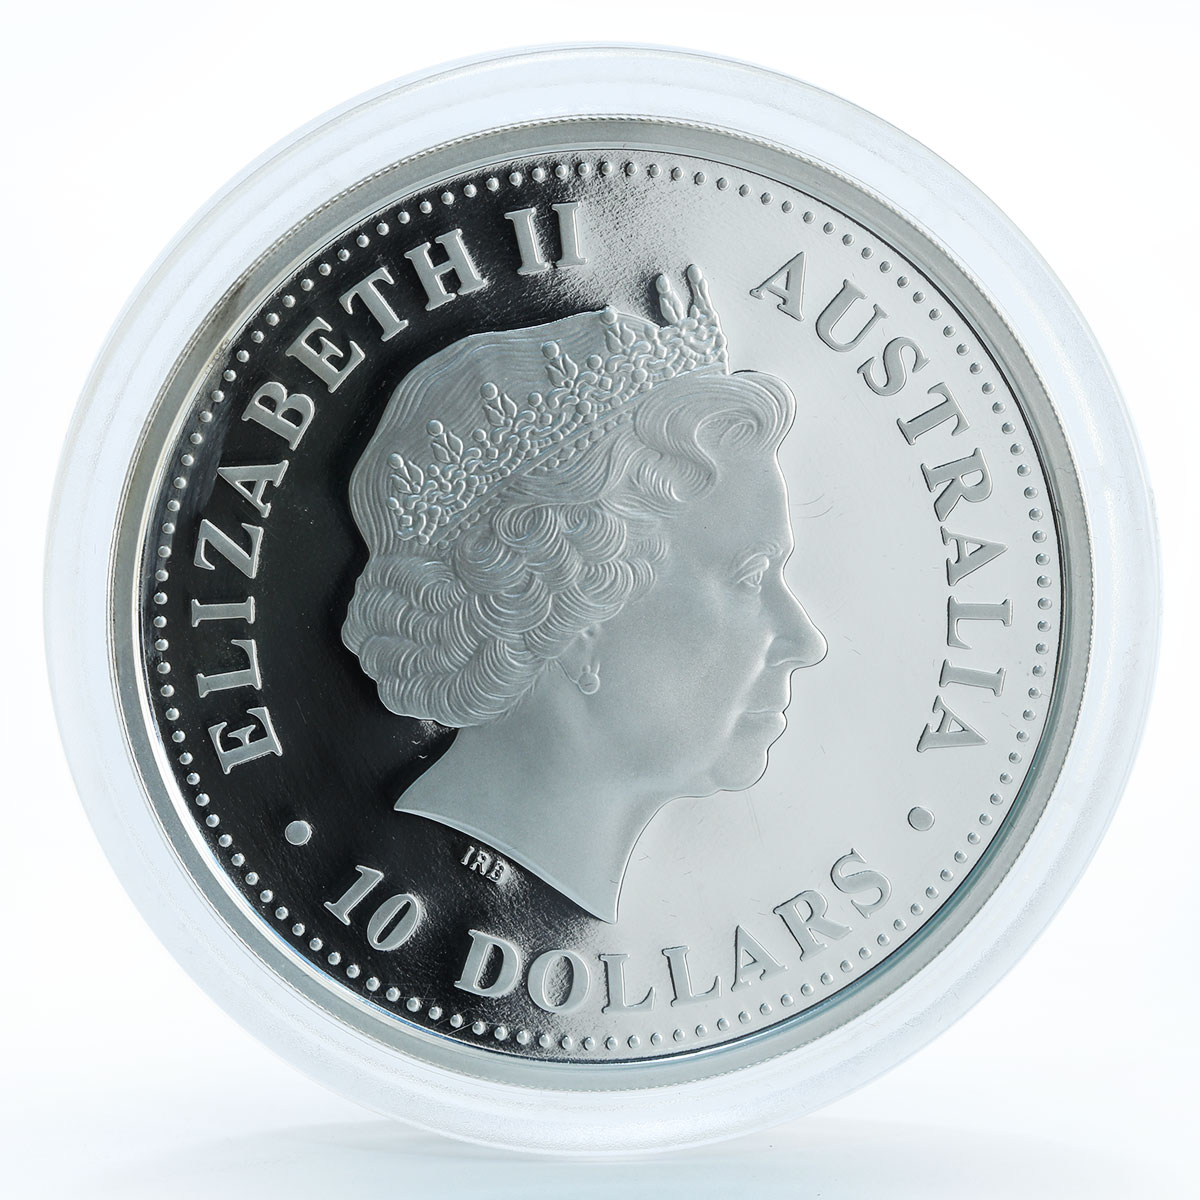 Australia 10 dollars Kookaburra Evolution of the Calendar silver proof coin 2001